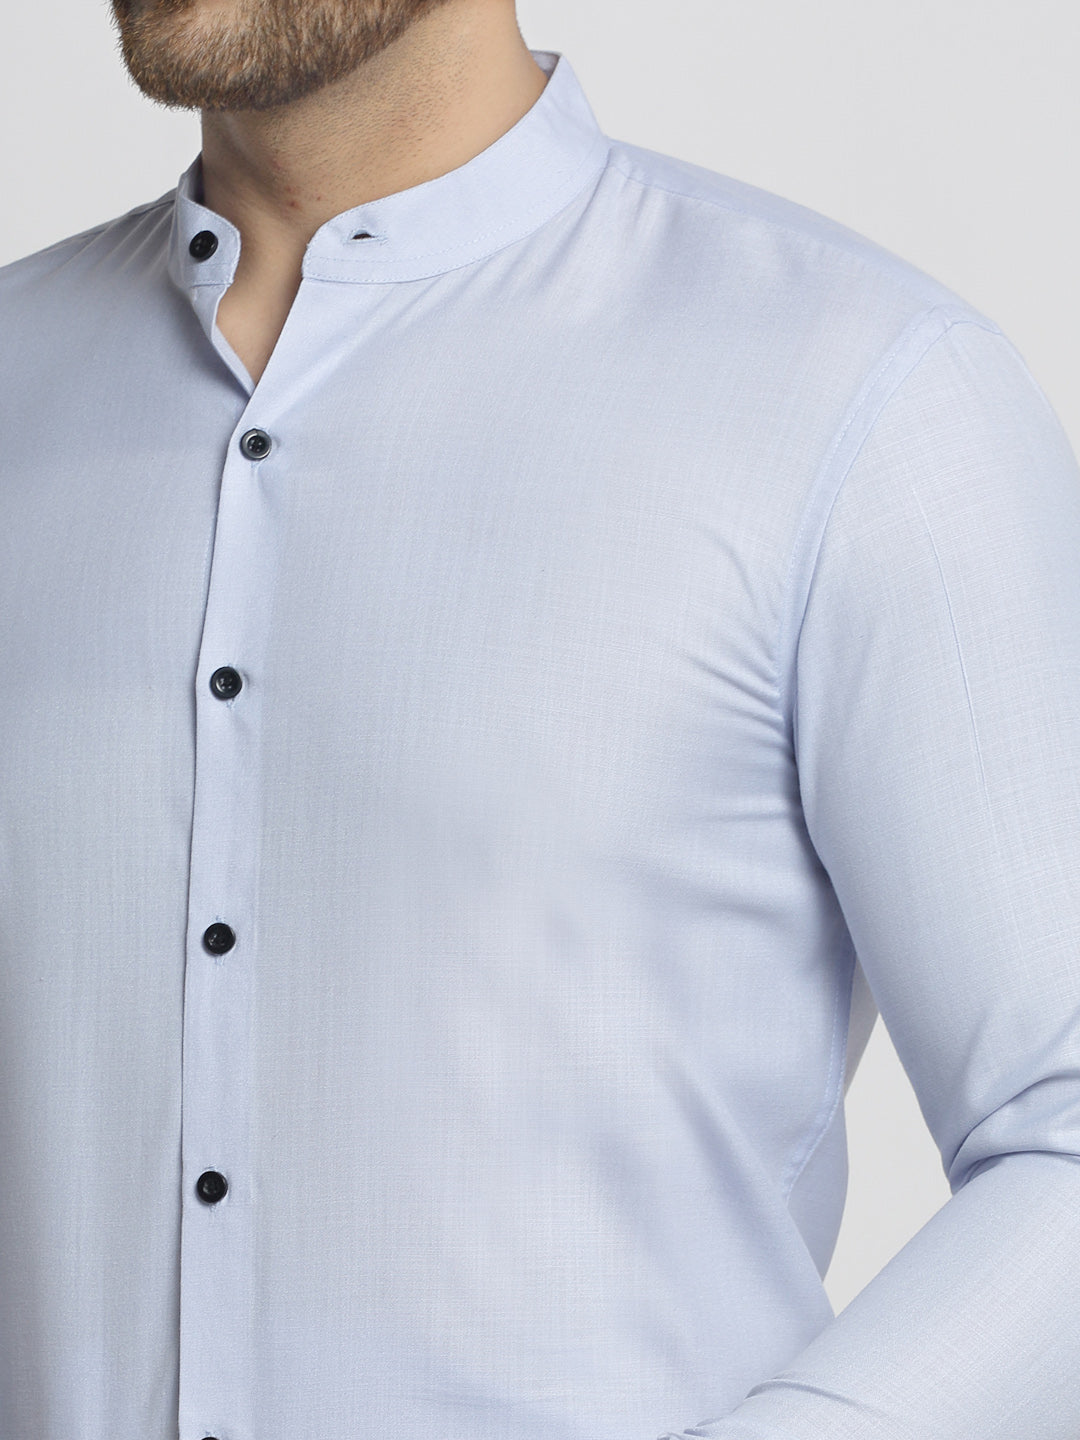 Men's Blue Cotton Solid Mandarin Collar Formal Shirts ( SF 726Sky ) - Jainish